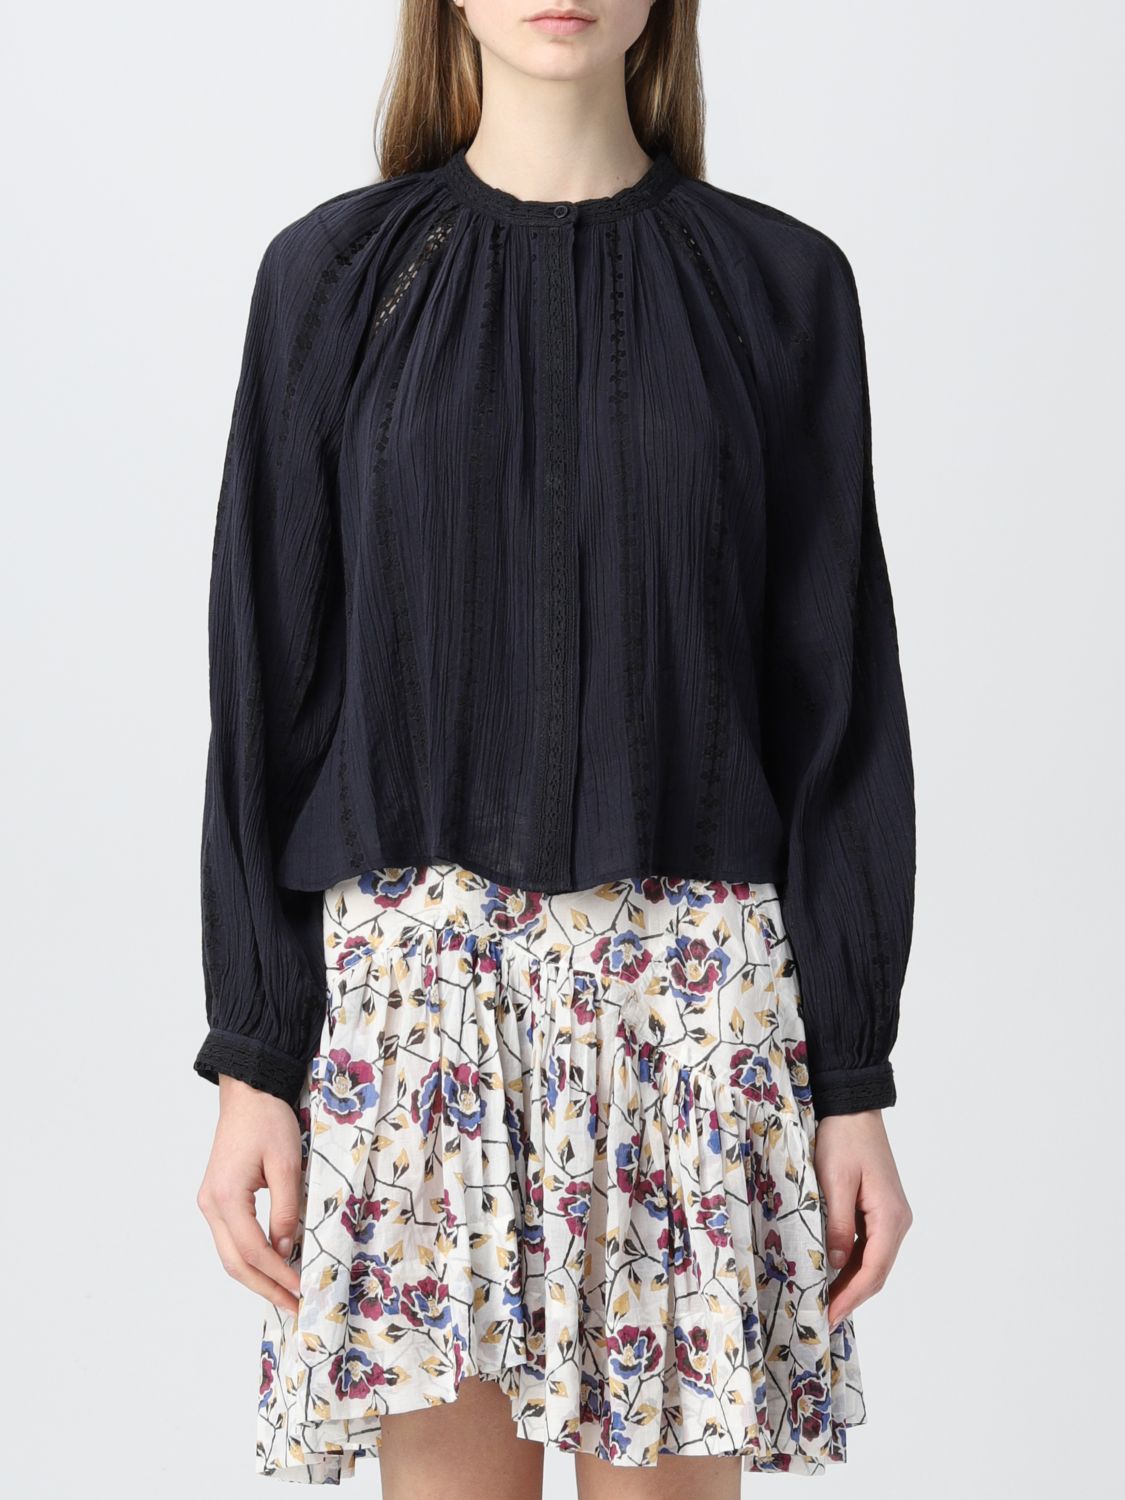 Janelle Isabel Marant Etoile blouse in cotton blend